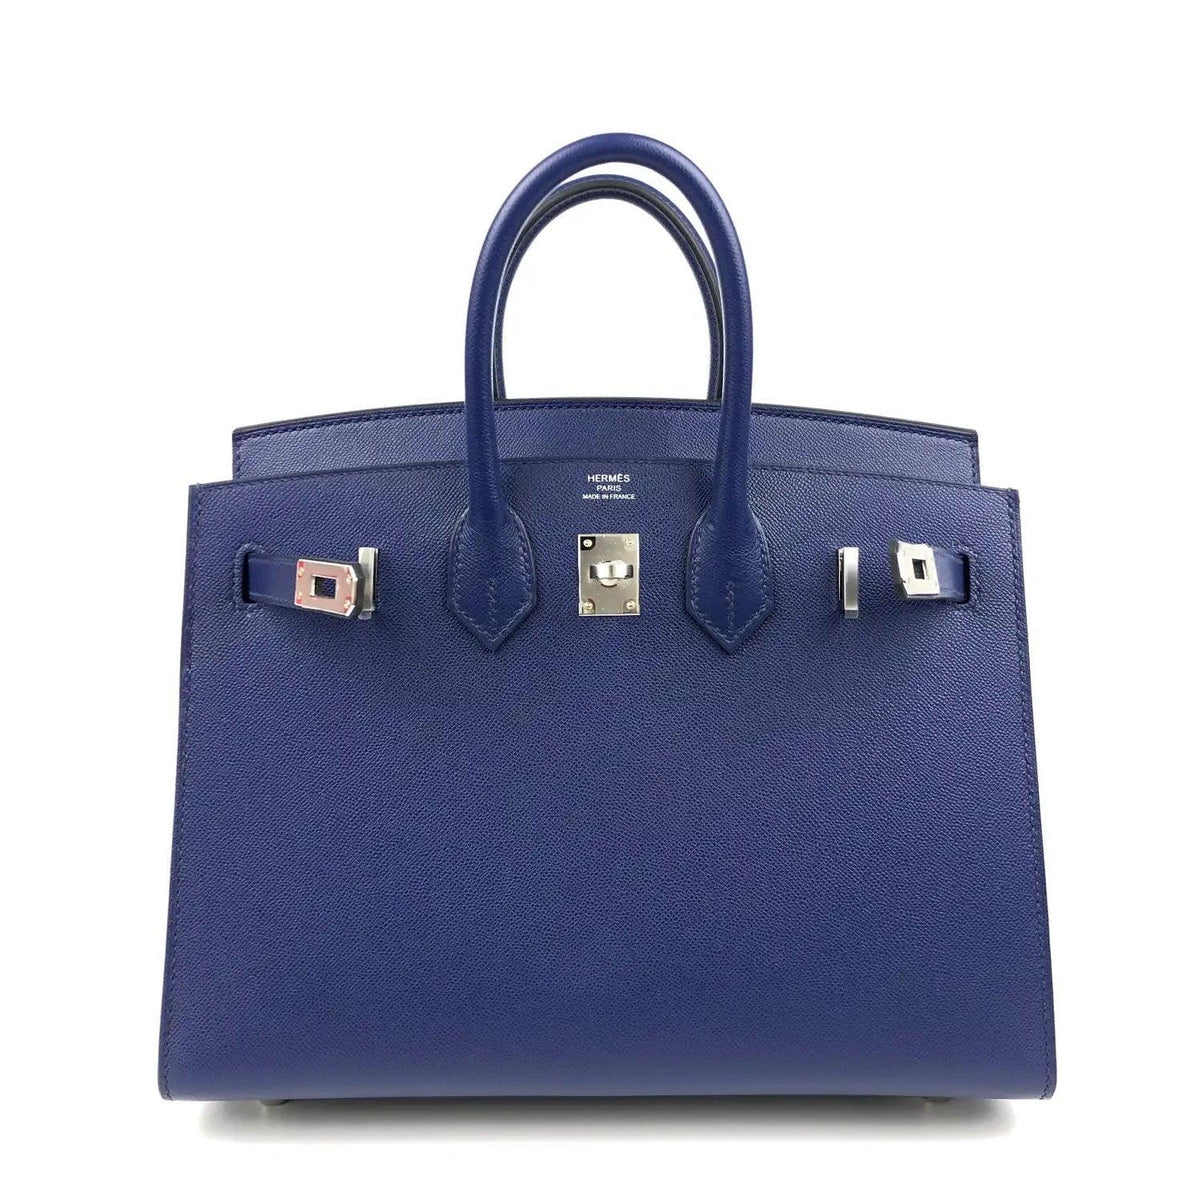 Louis Vuitton Bleu Nuit - 3 For Sale on 1stDibs